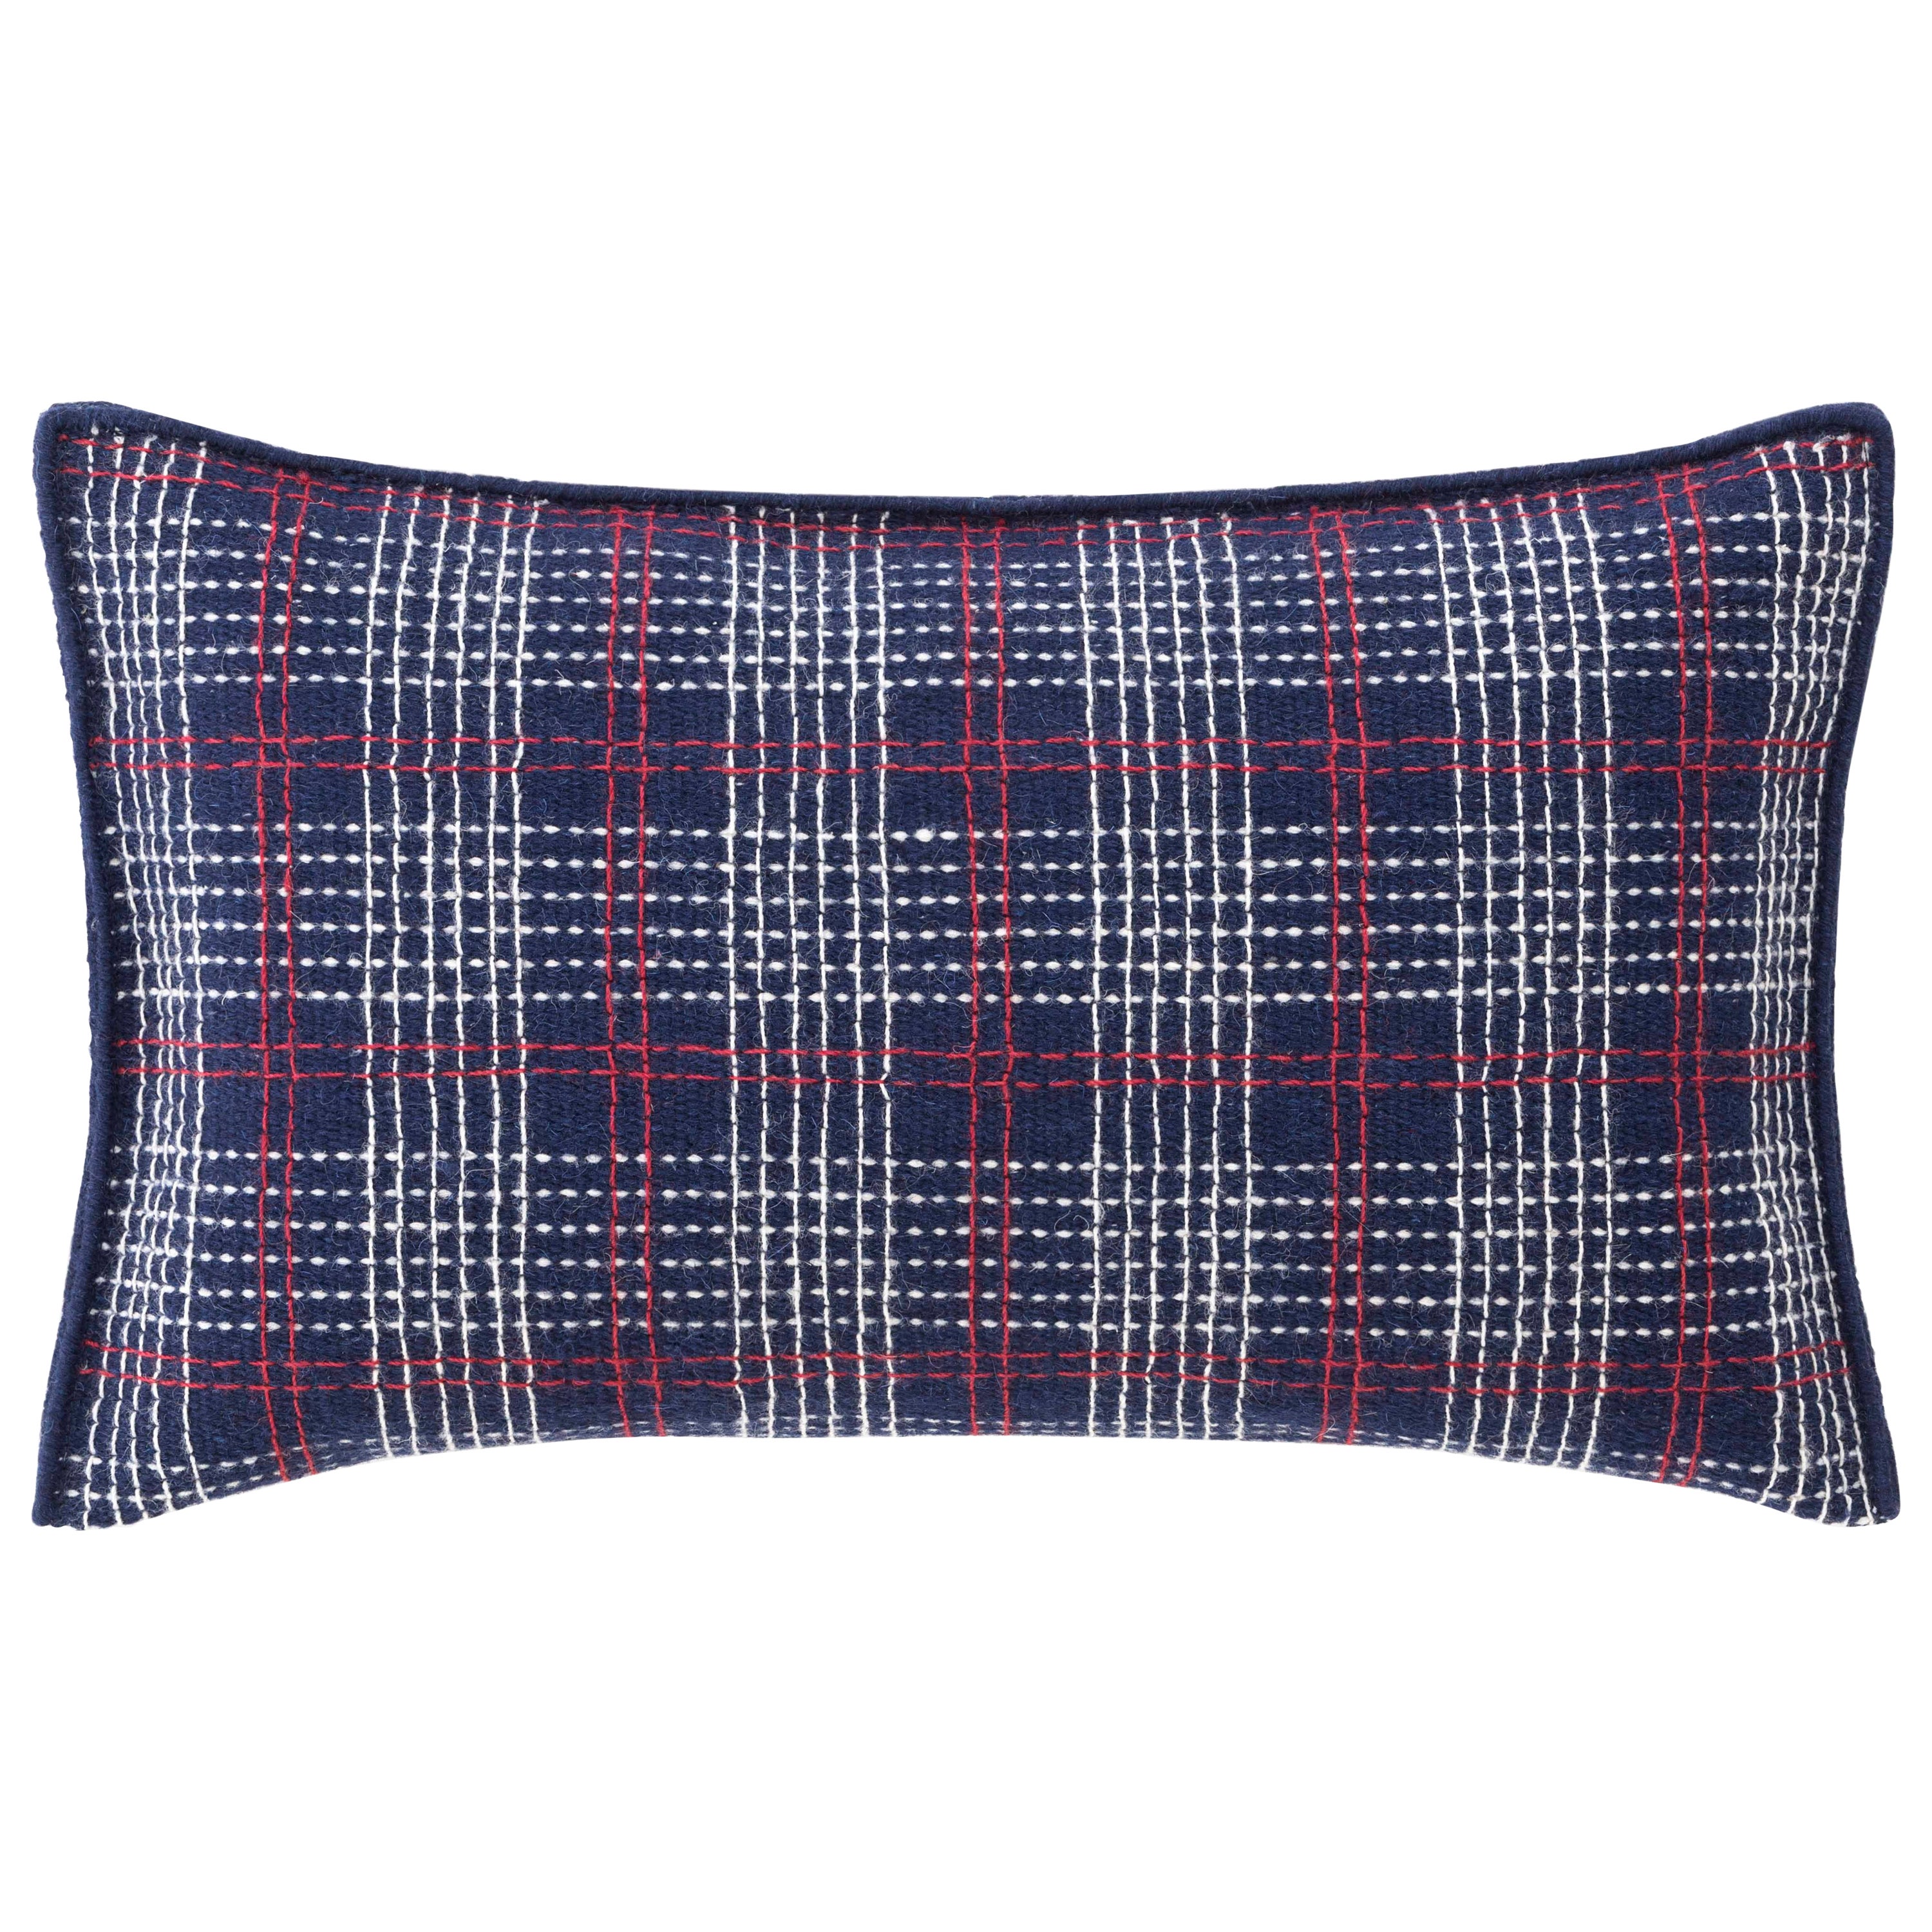 GAN Spaces Lan Small Cushion with Wool in Indigo by Neri&Hu